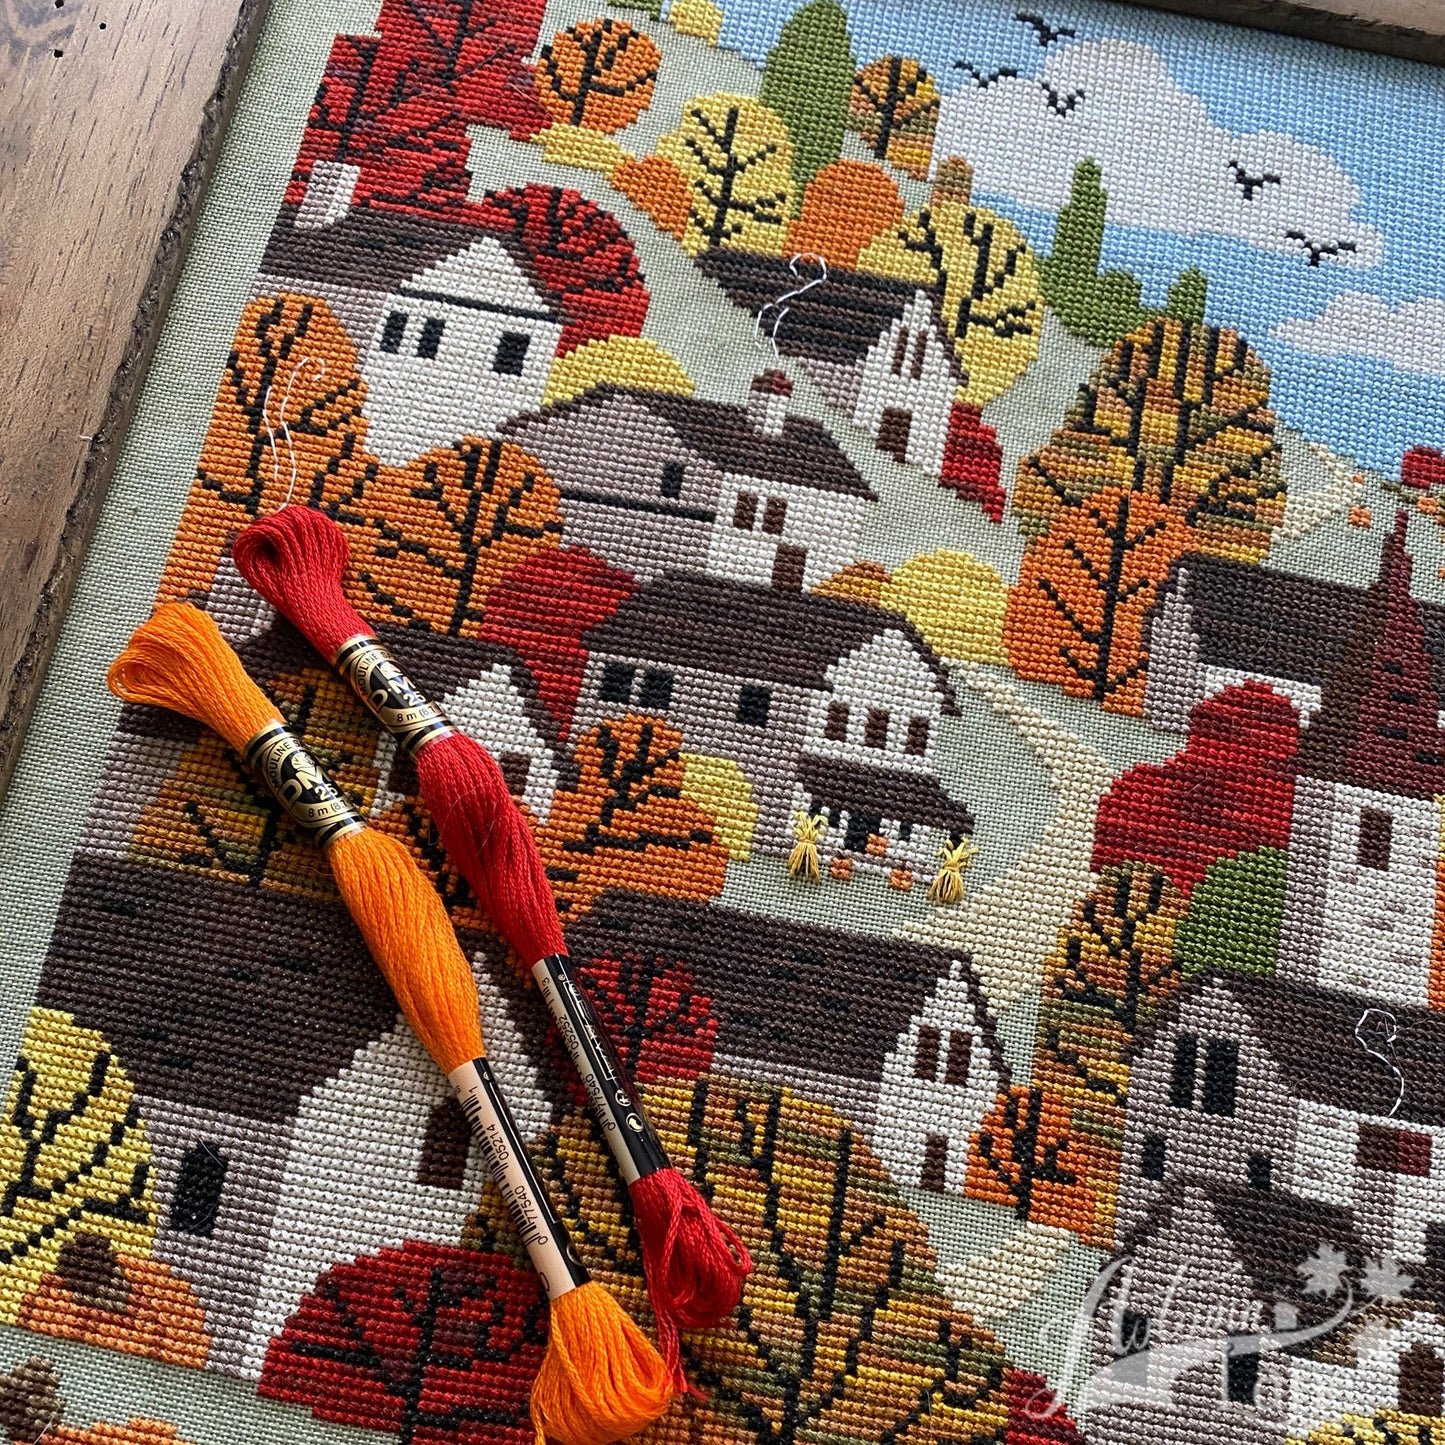 Autumn Towne Cross Stitch Pattern - Digital Download